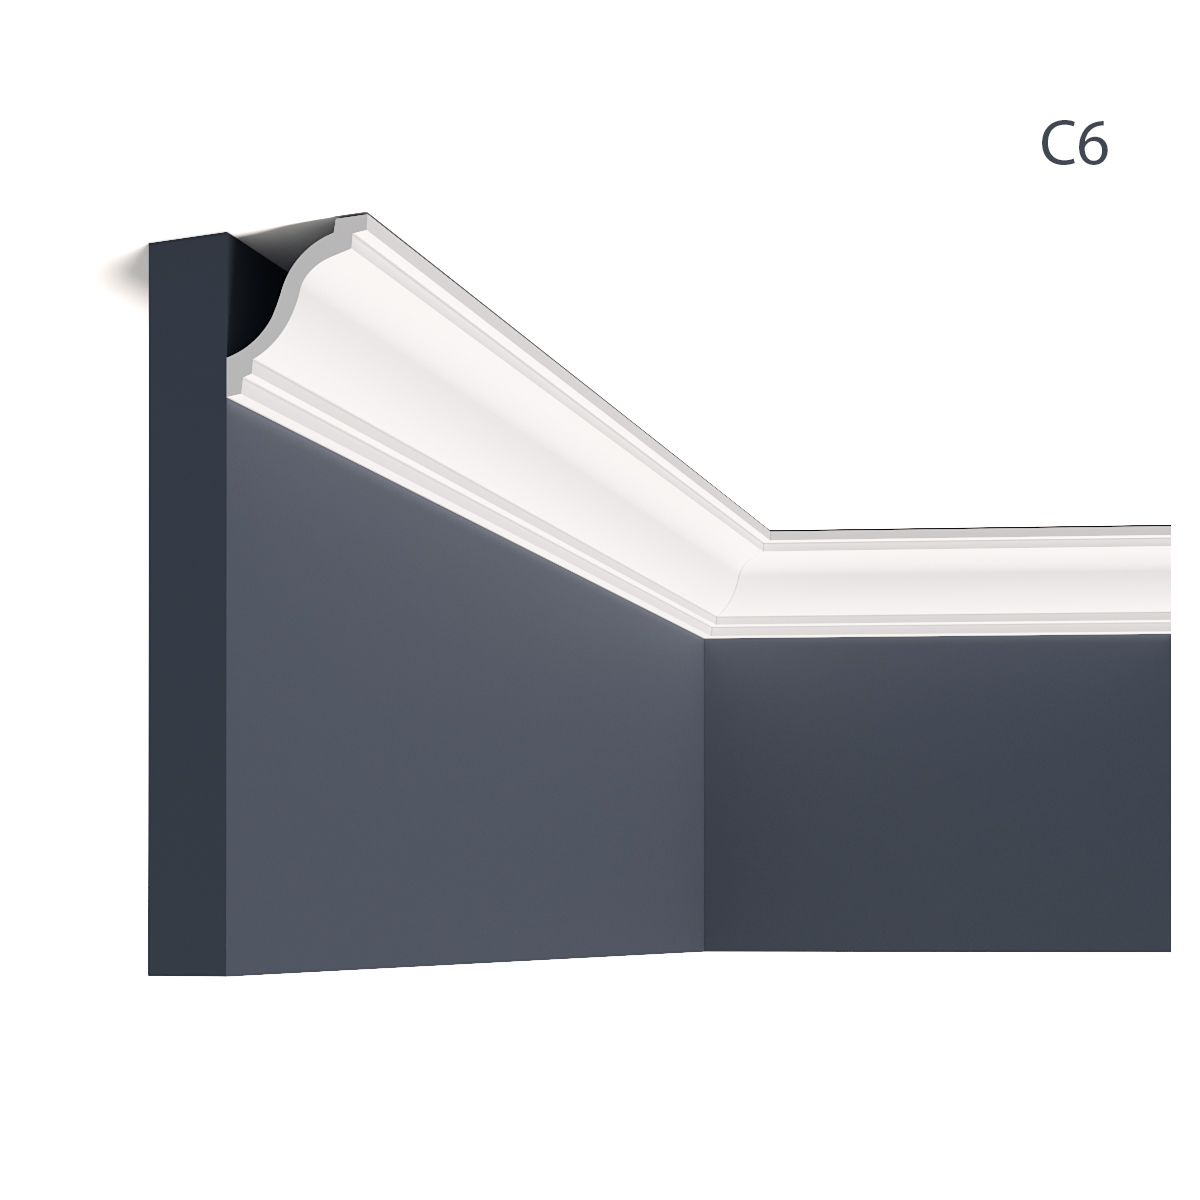 Cornisa decorativa din polimer rigid C6 - 5.4 x 5.2 x 200 cm, Manavi, Cornișe tavan 